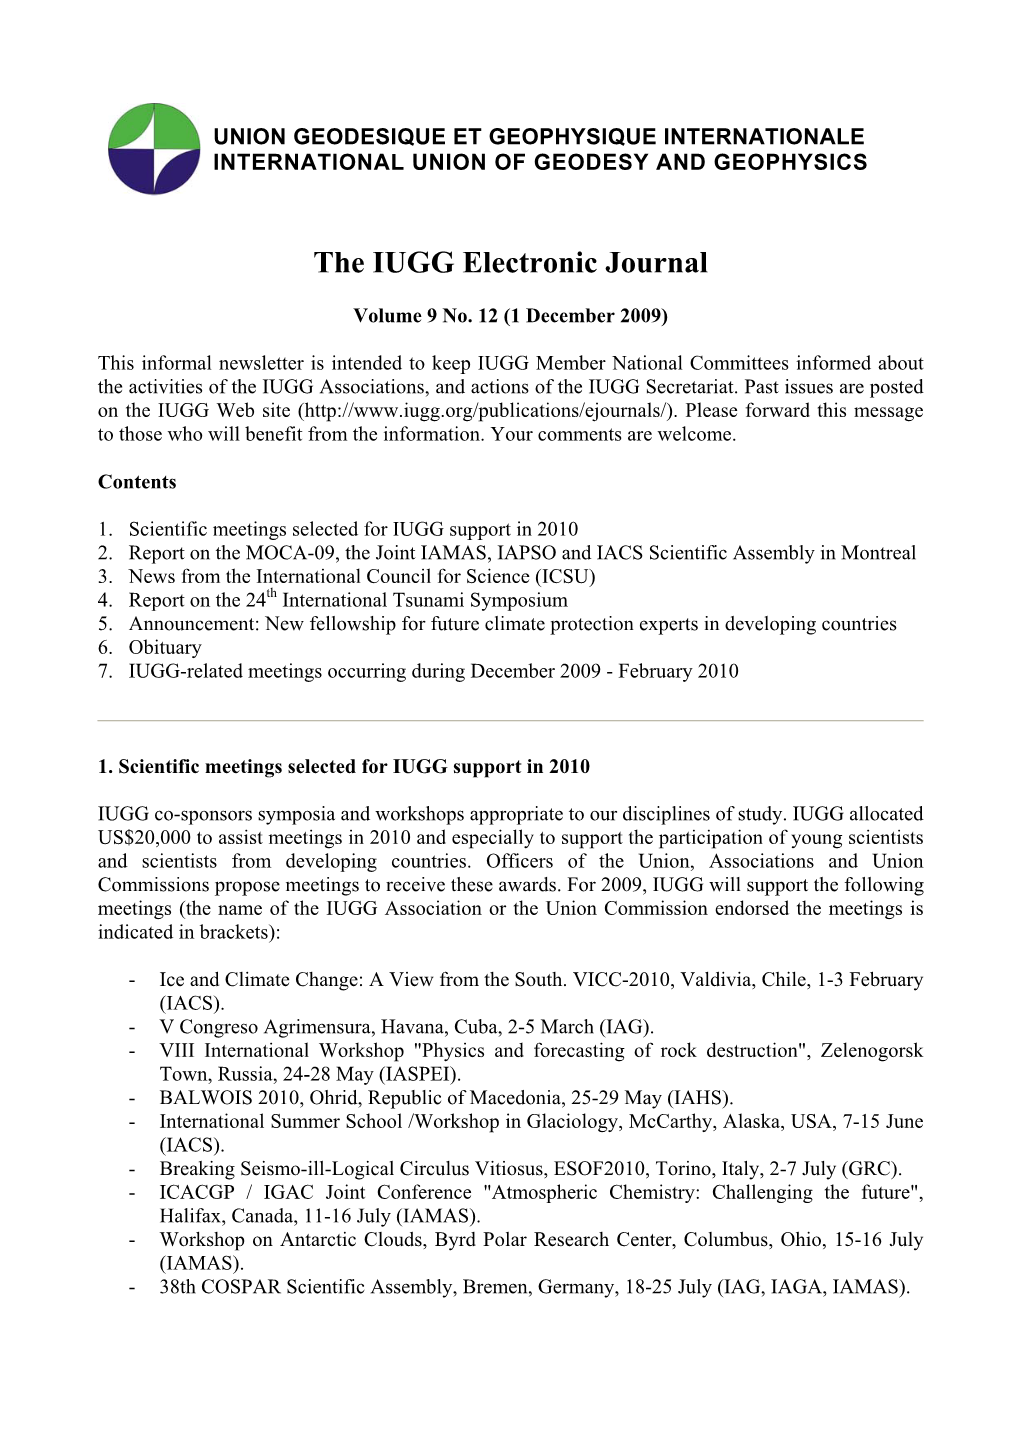 The IUGG Electronic Journal